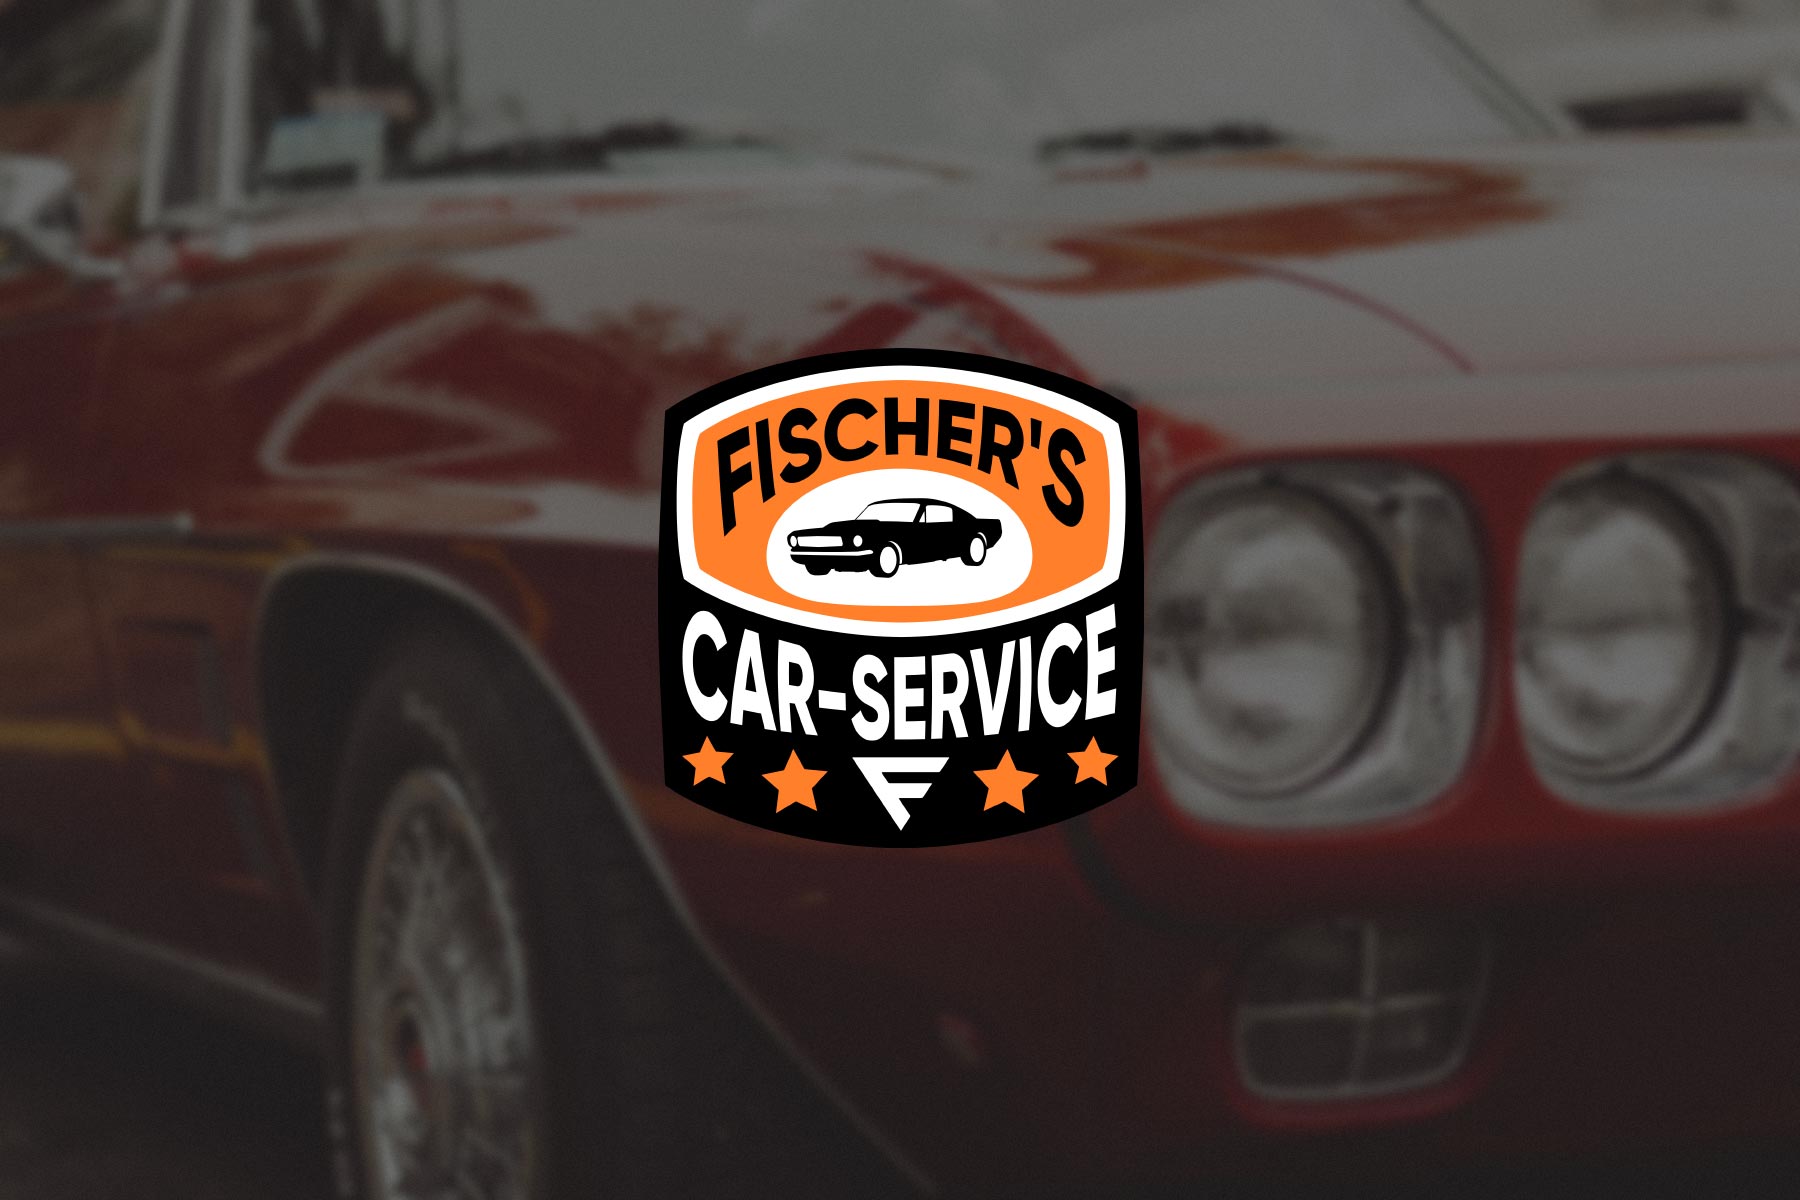 (c) Fischers-carservice.at